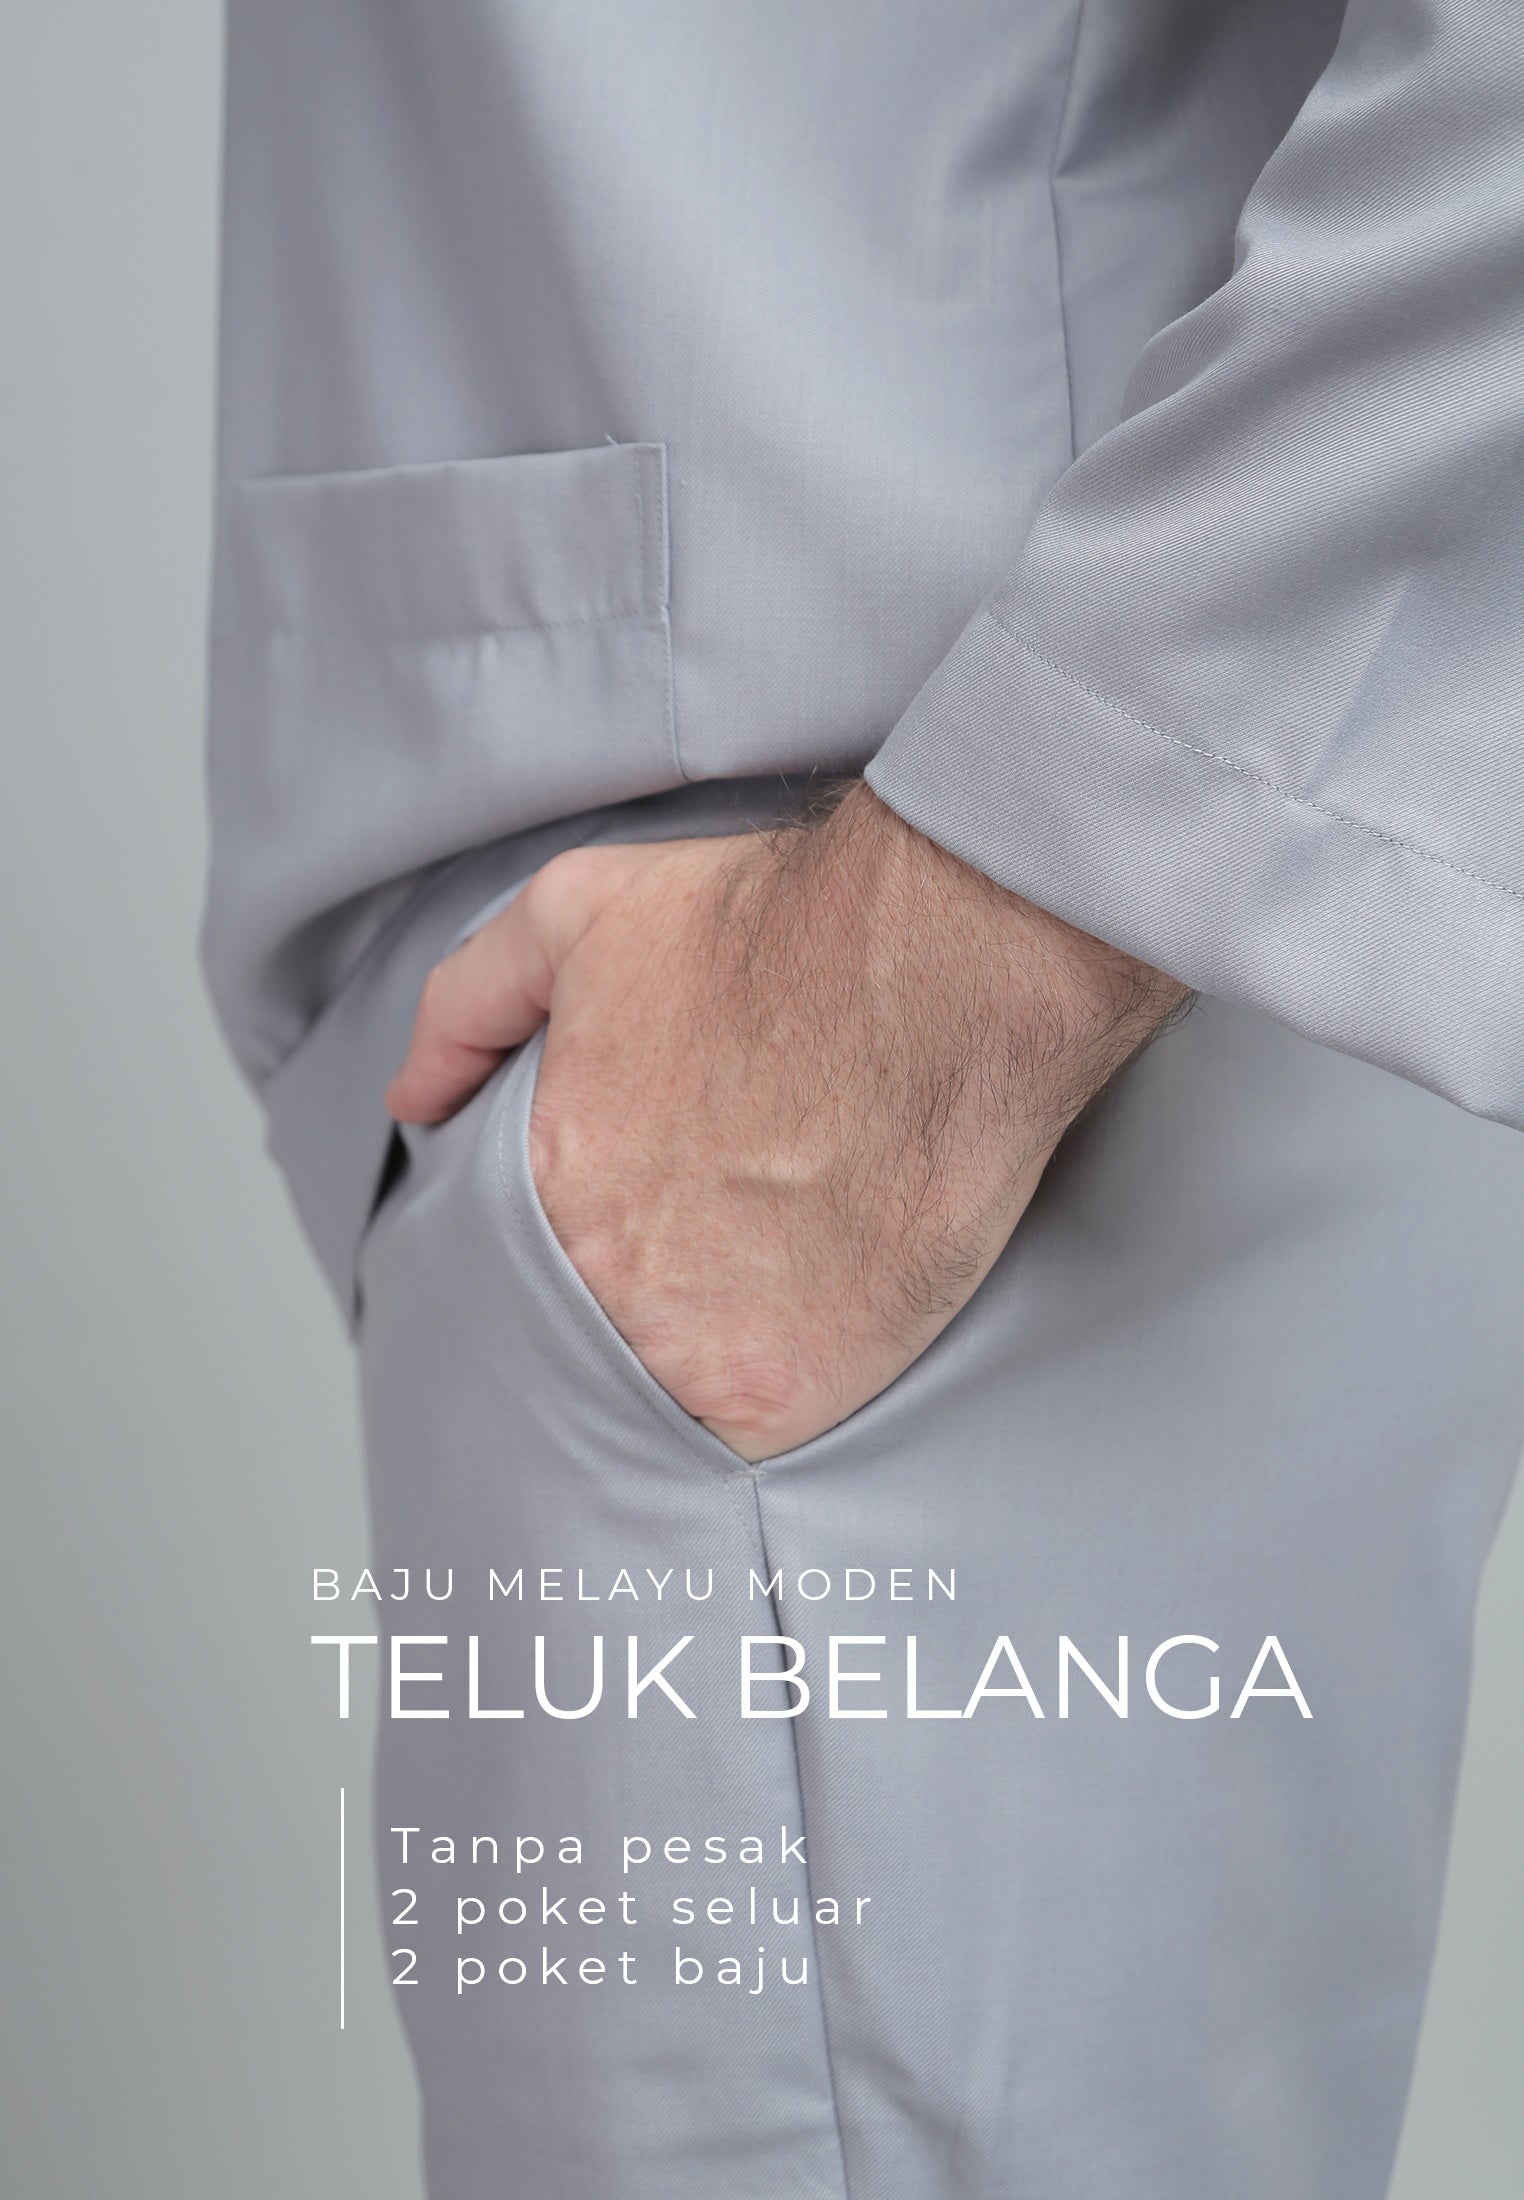 Baju Melayu Teluk Belanga Vol 1